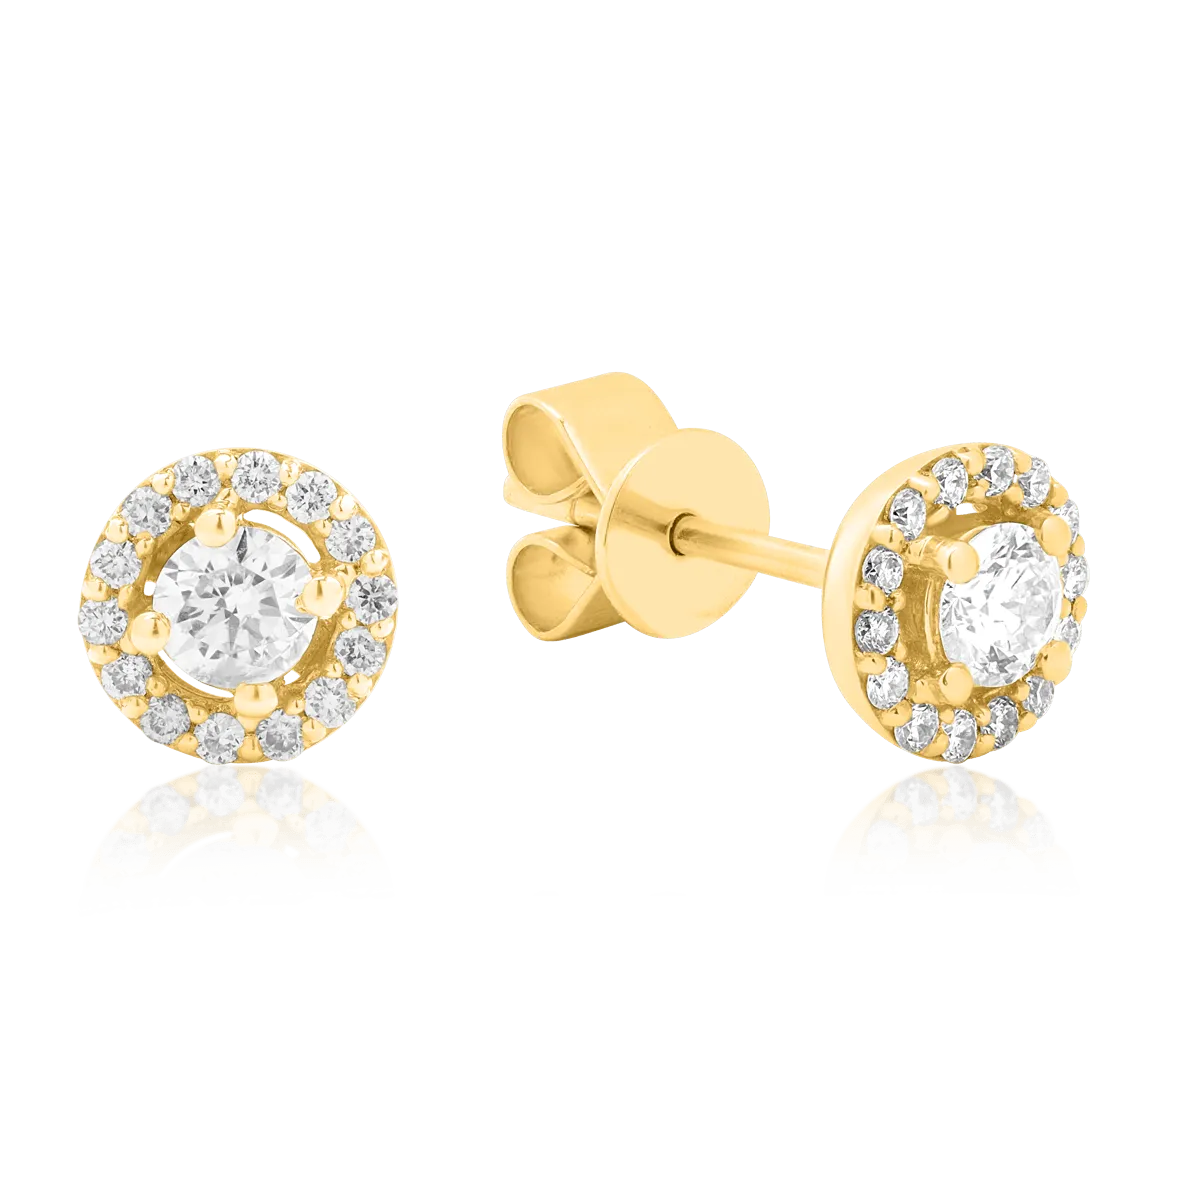 18K yellow gold earrings with 0.34ct diamonds